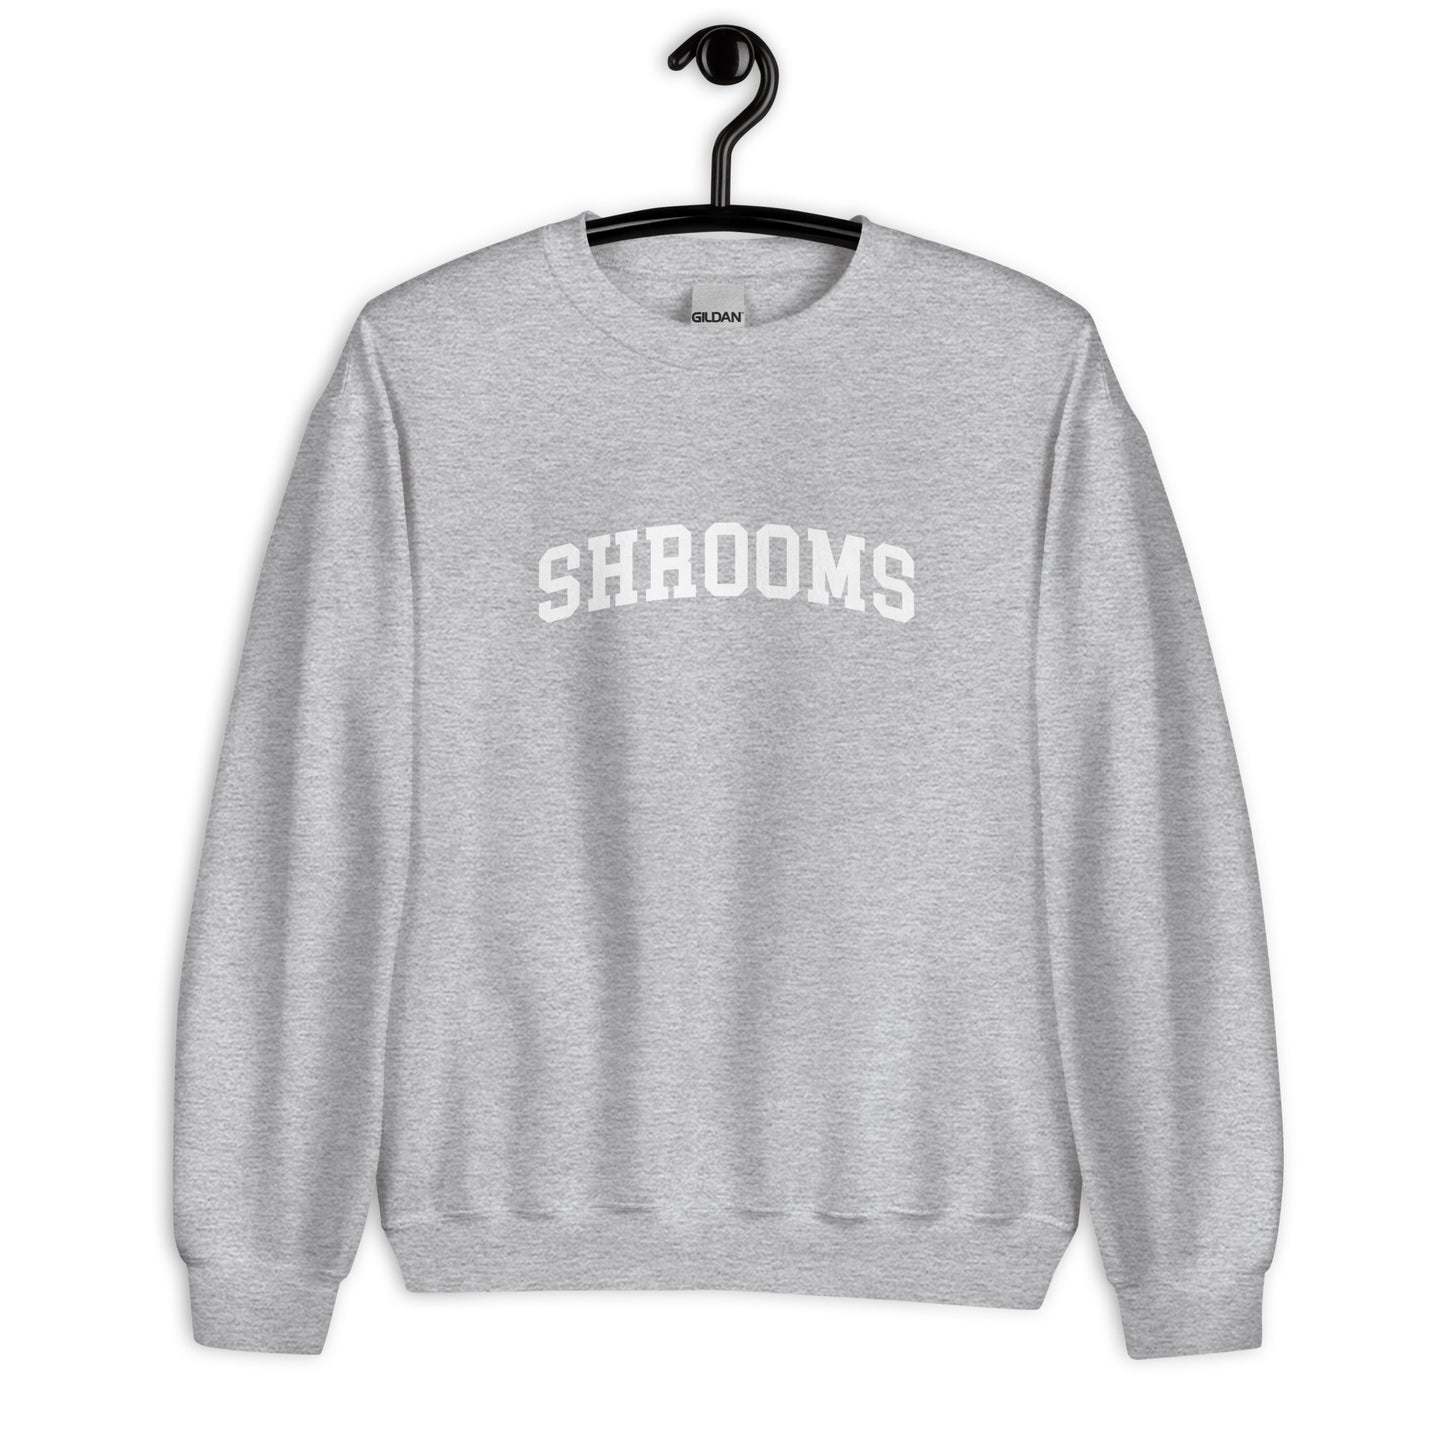 Shrooms Sweatshirt - Arched Font